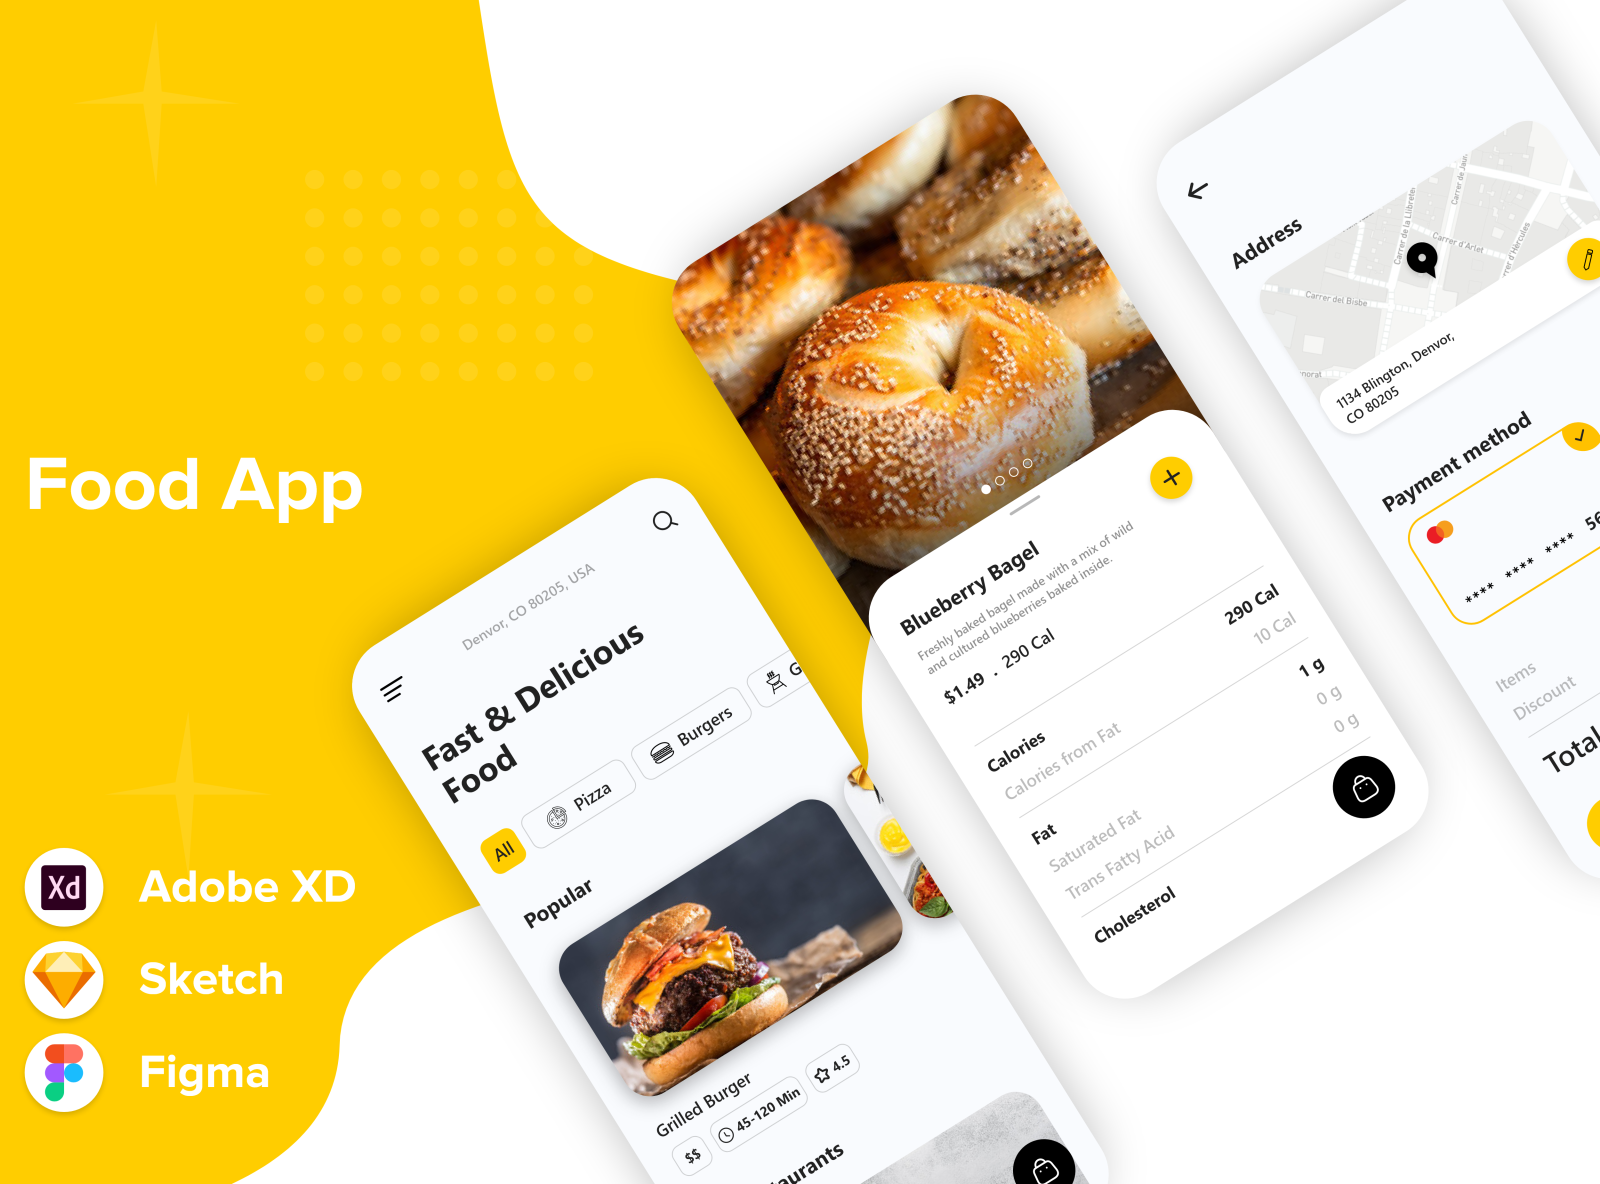 Food App UI Design by Shazib Farooq on Dribbble